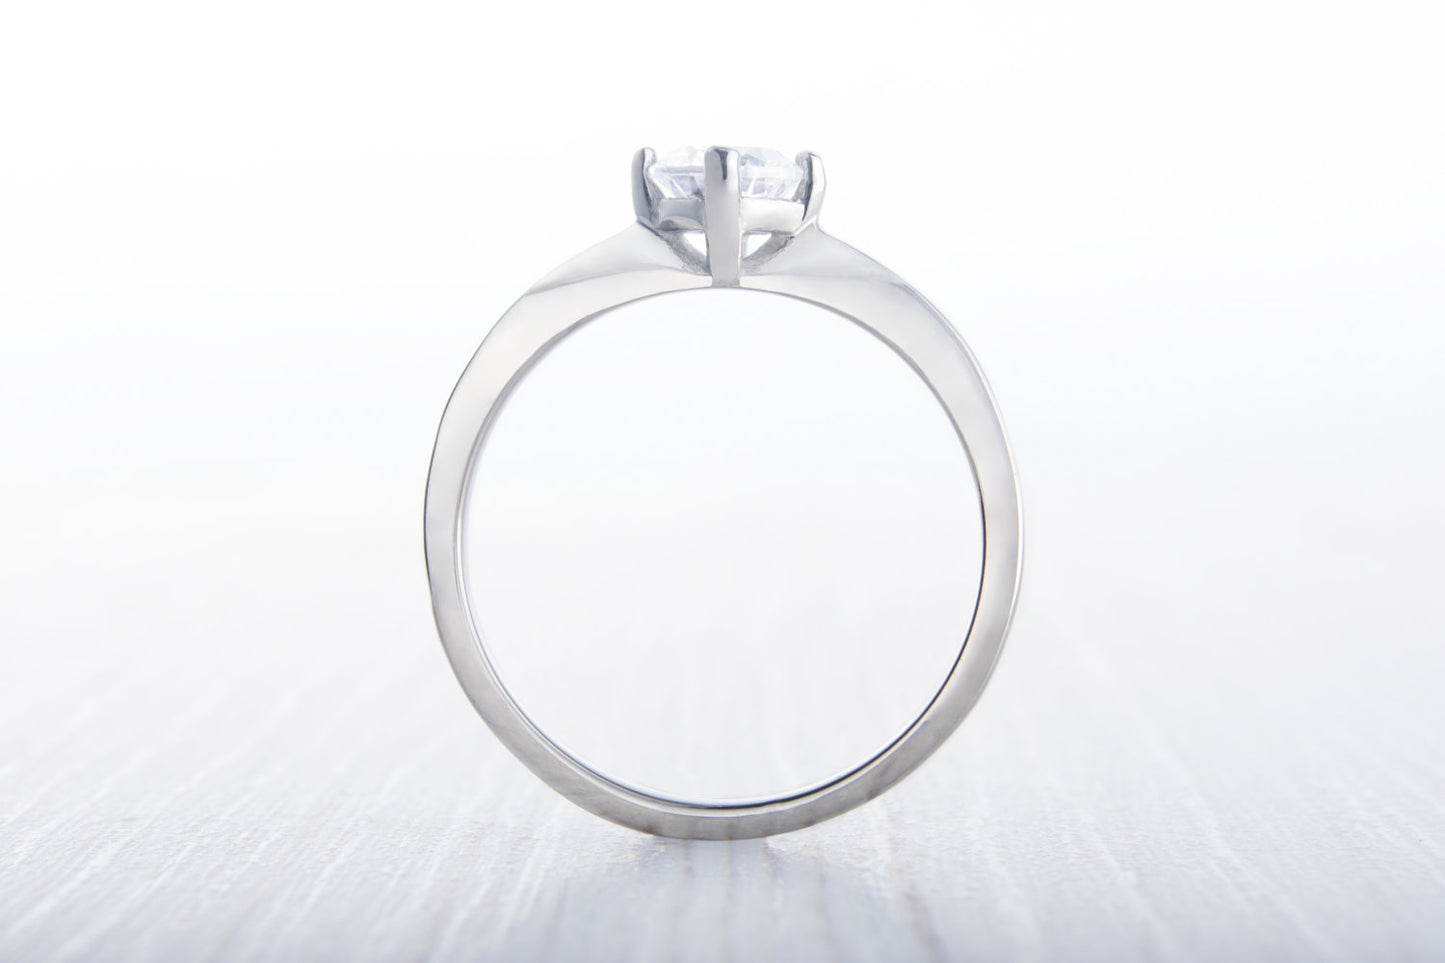 Titanium and Man Made Diamond Simulant solitaire ring - engagement ring - wedding ring